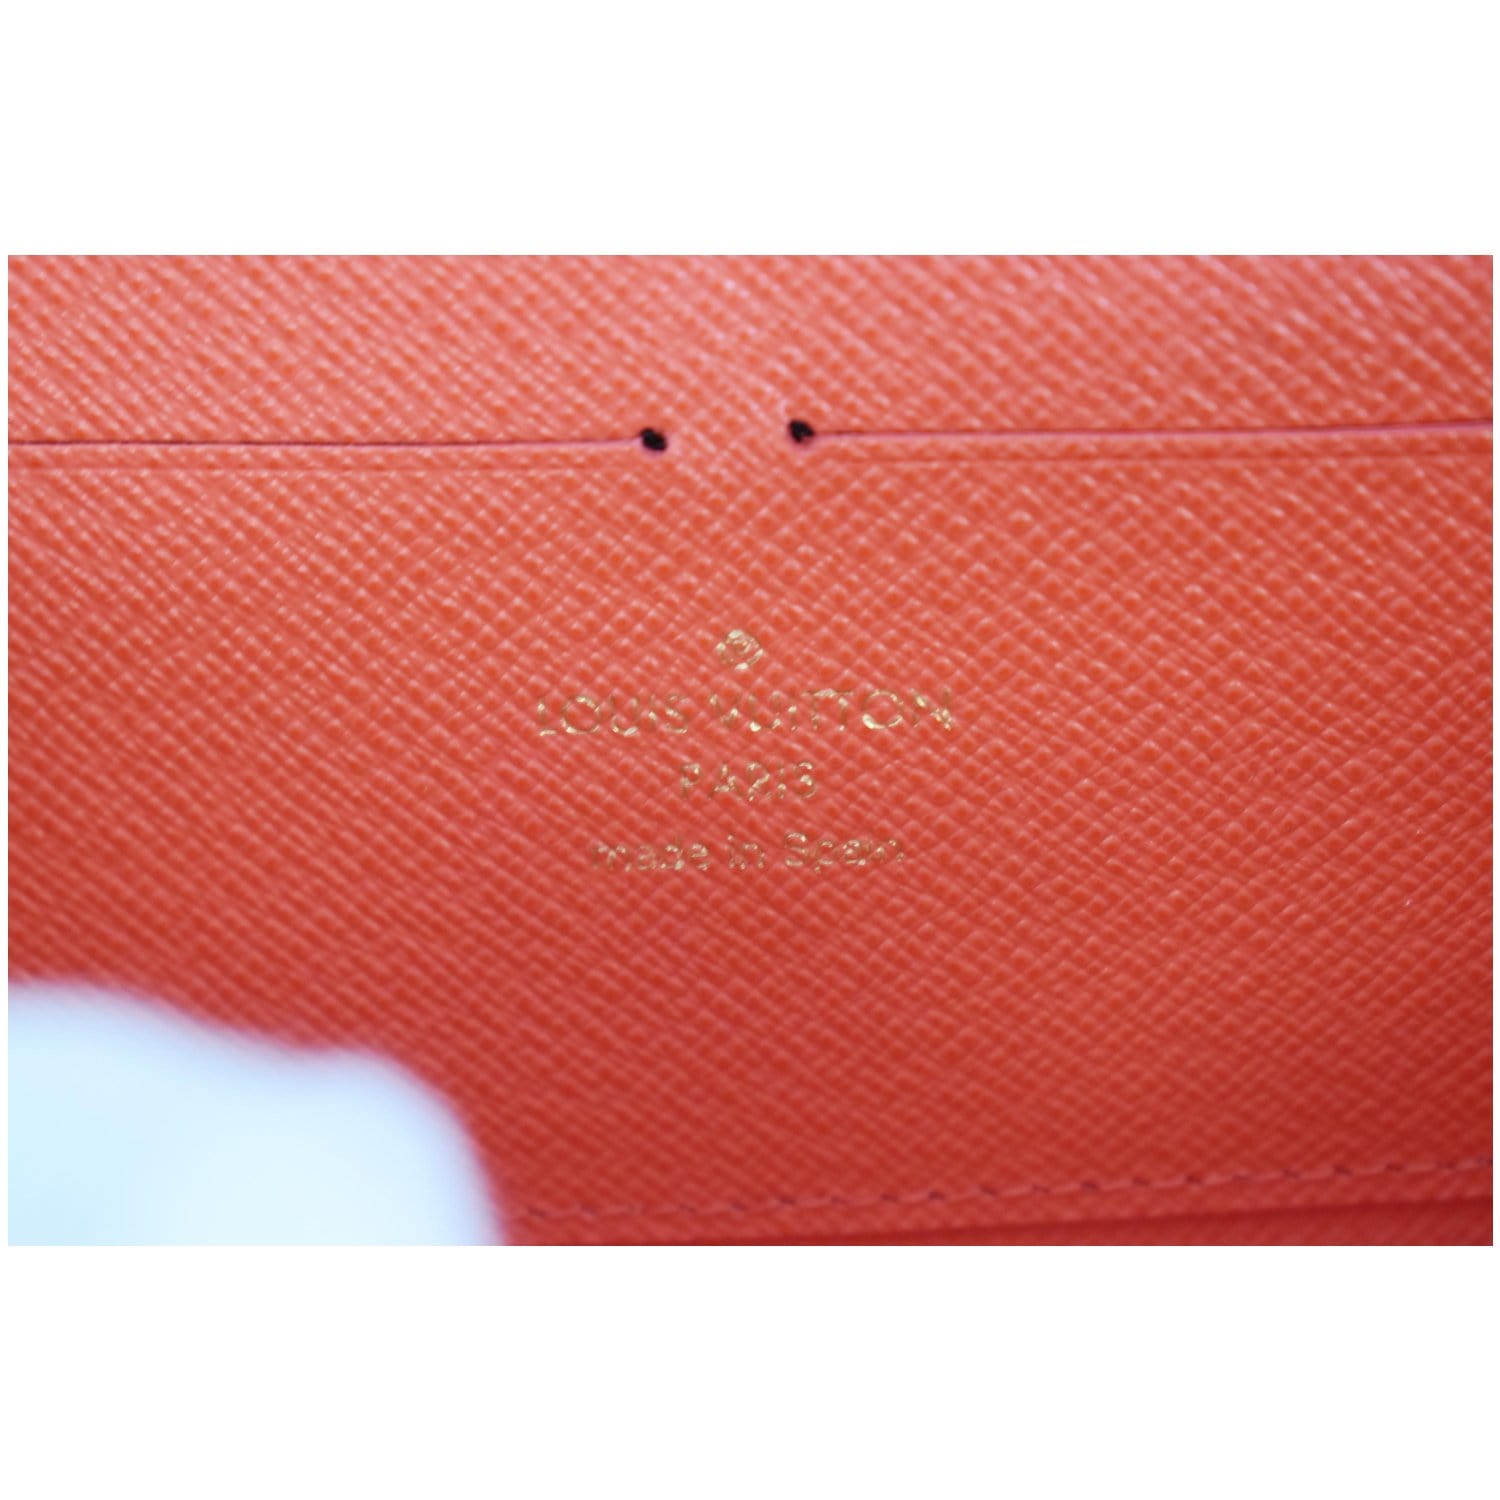 Louis Vuitton Monogram Canvas Wallet With Pink Interior AGC1414